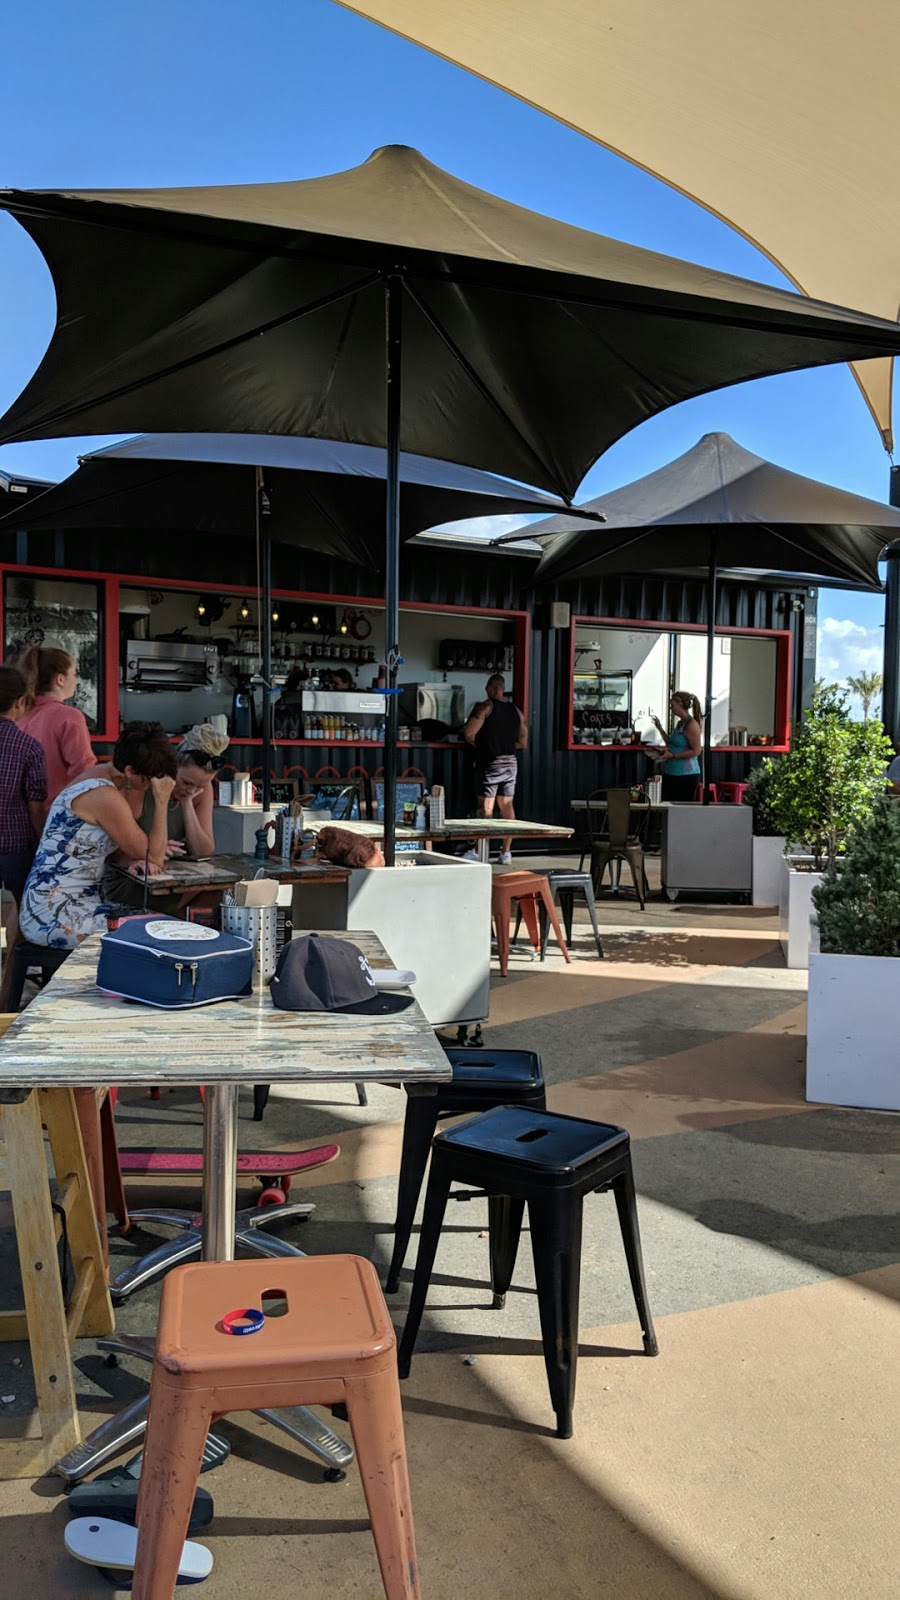 Izba Espresso - Newport (Newport QLD 4020) Opening Hours